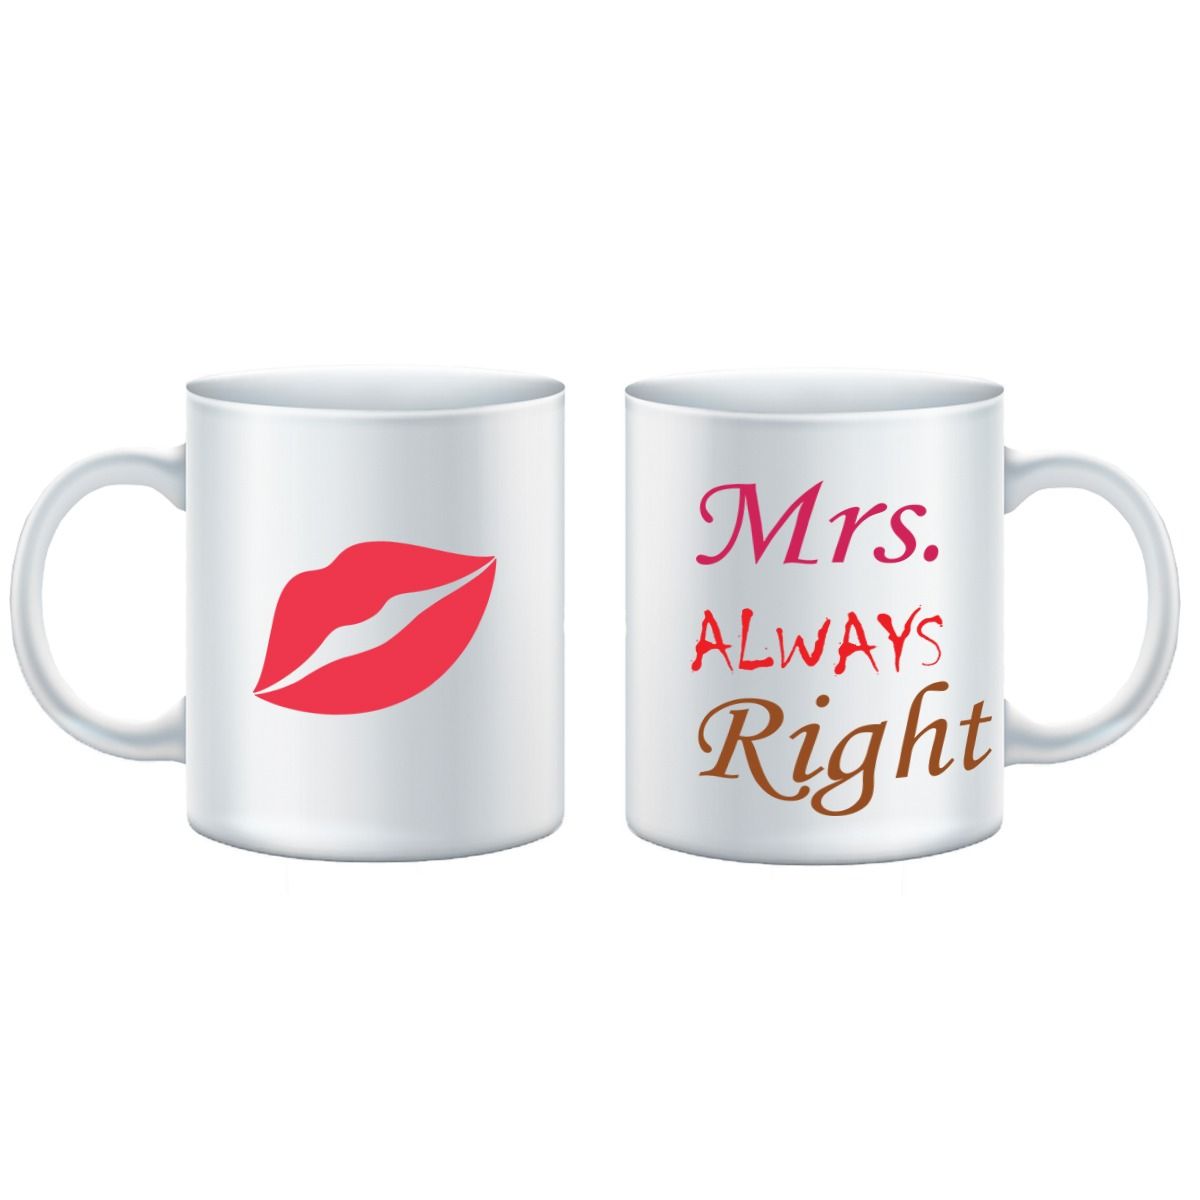 Mrs. Always Right Mug